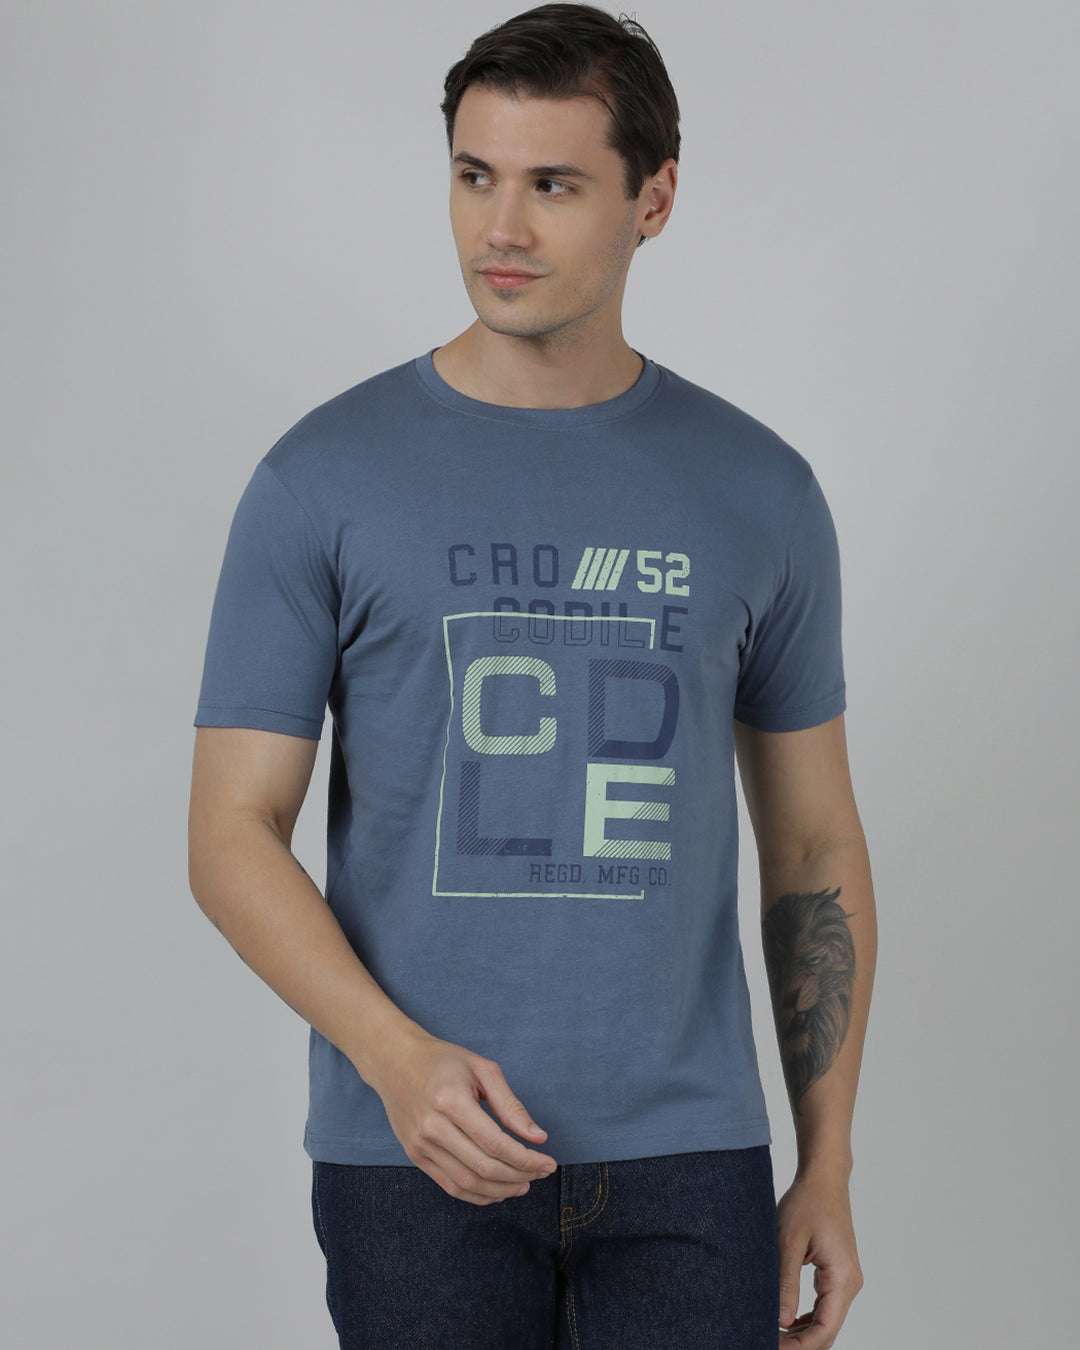 Men's Printed Round Neck Half Sleeve Cotton T-Shirt - CHINA BLUE/GREY MELANGE